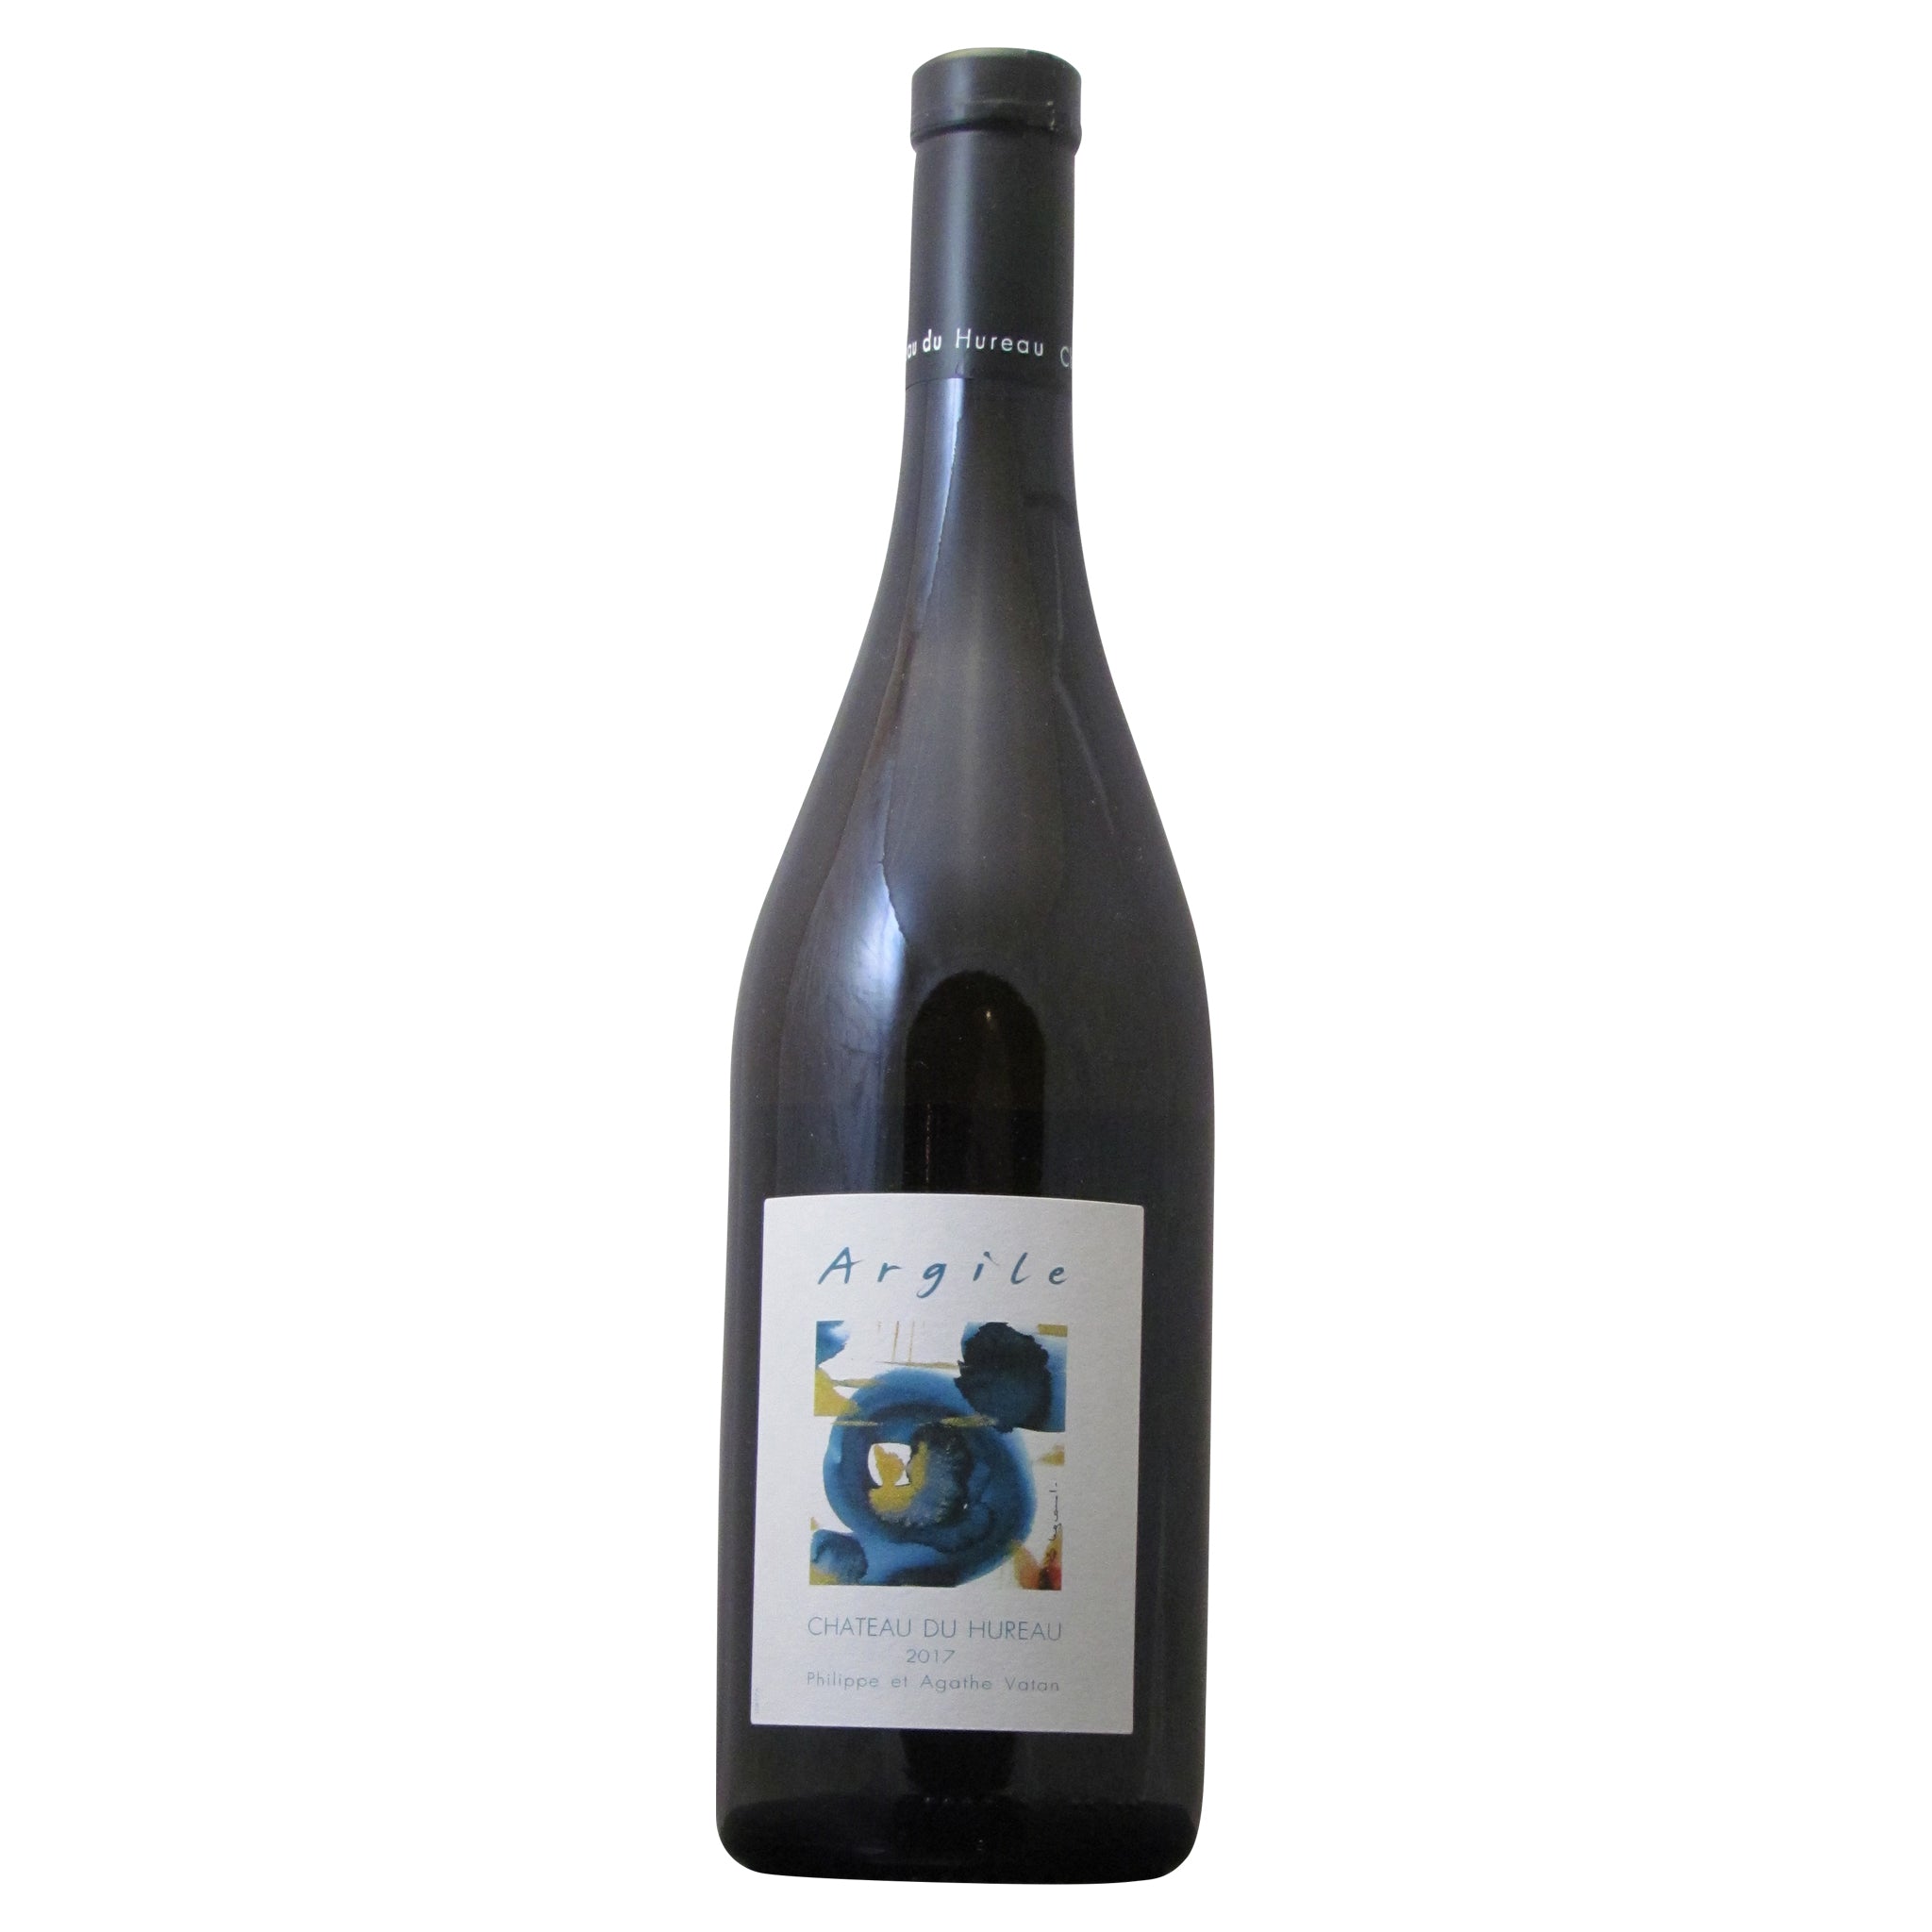 18 Hureau Saumur Argile Blanc Some Good Wine